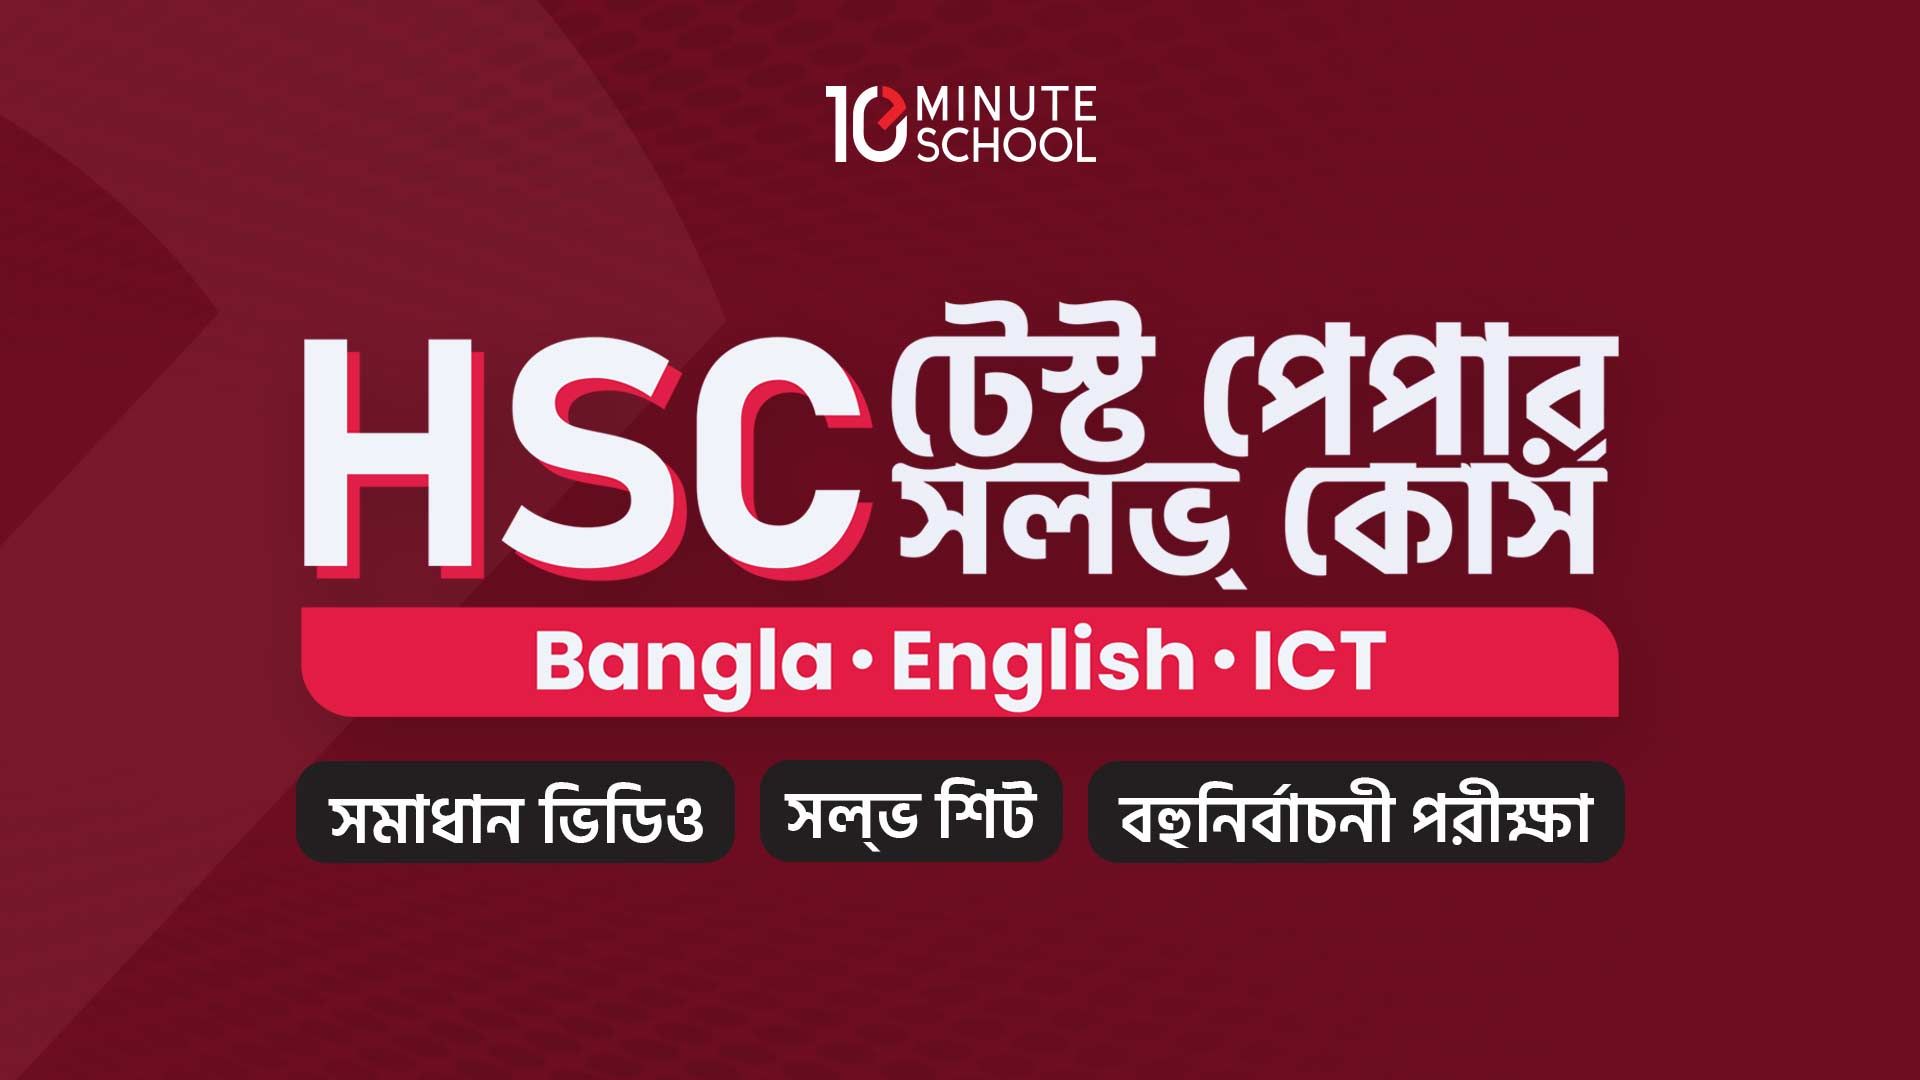 HSC - শর্ট সিলেবাস টেস্ট পেপার সল্ভ কোর্স  (Bangla, English, ICT)